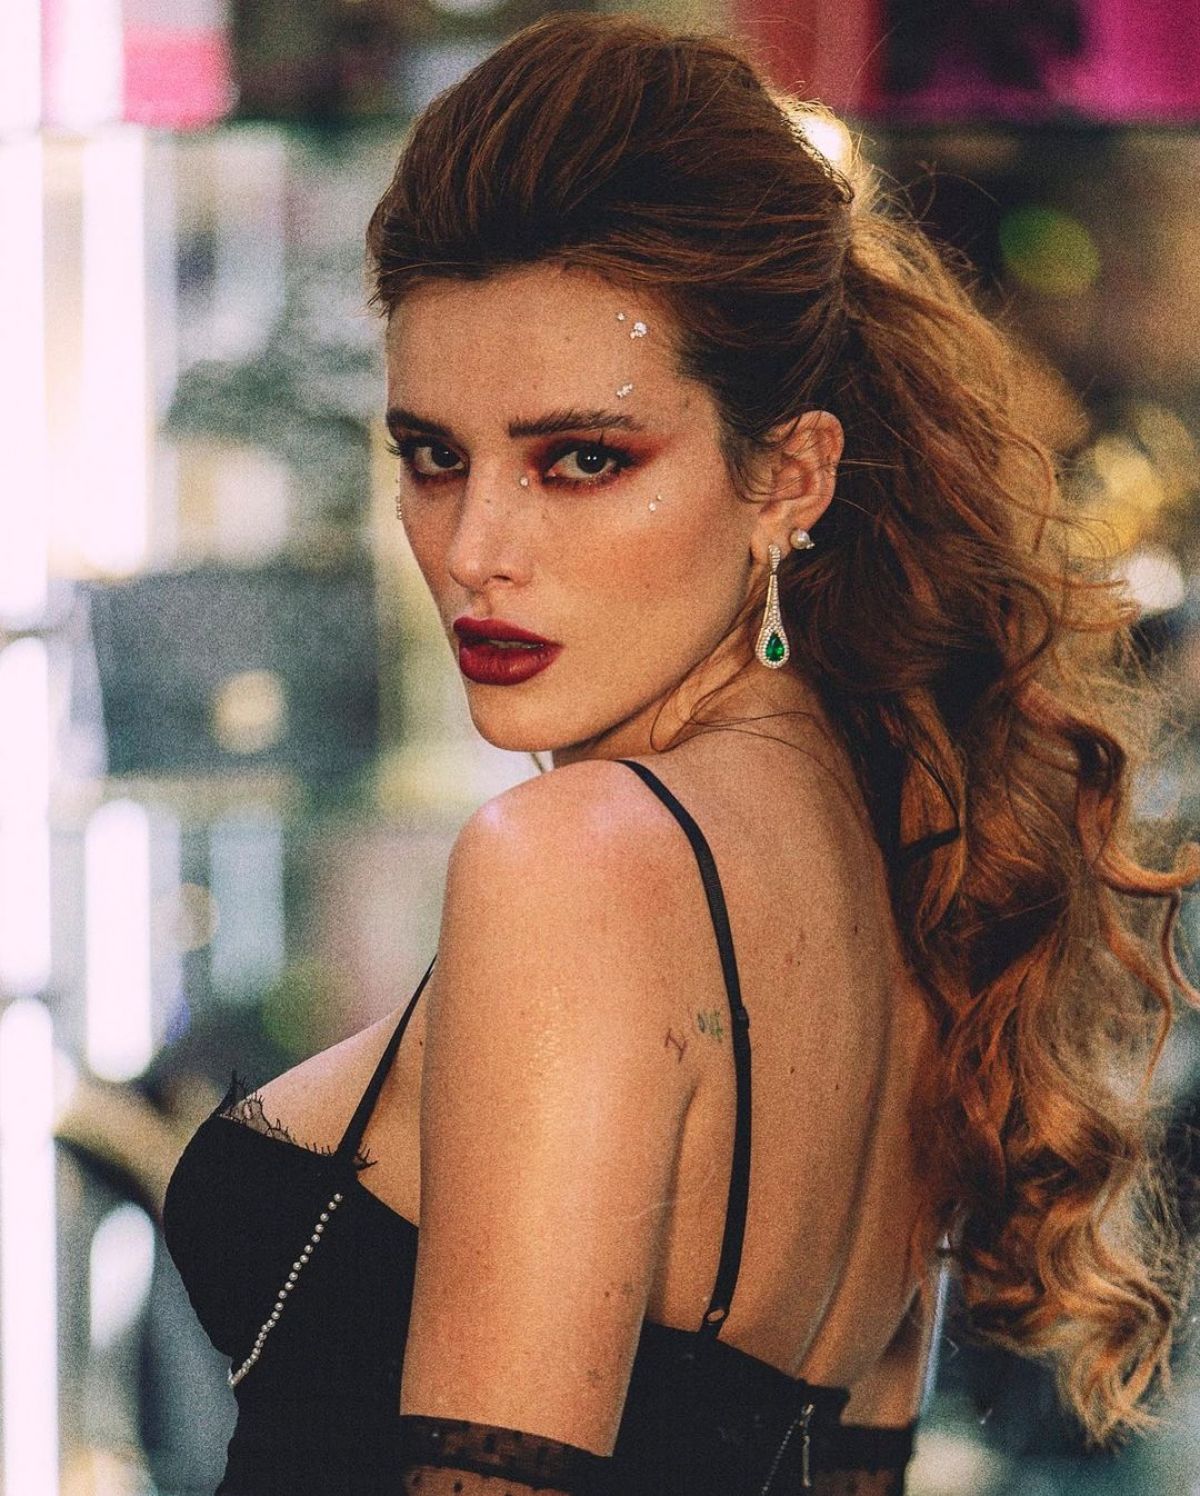 Bella Thorne Photoshoot in Black Lingerie - Instagram Photos 2020/11/16